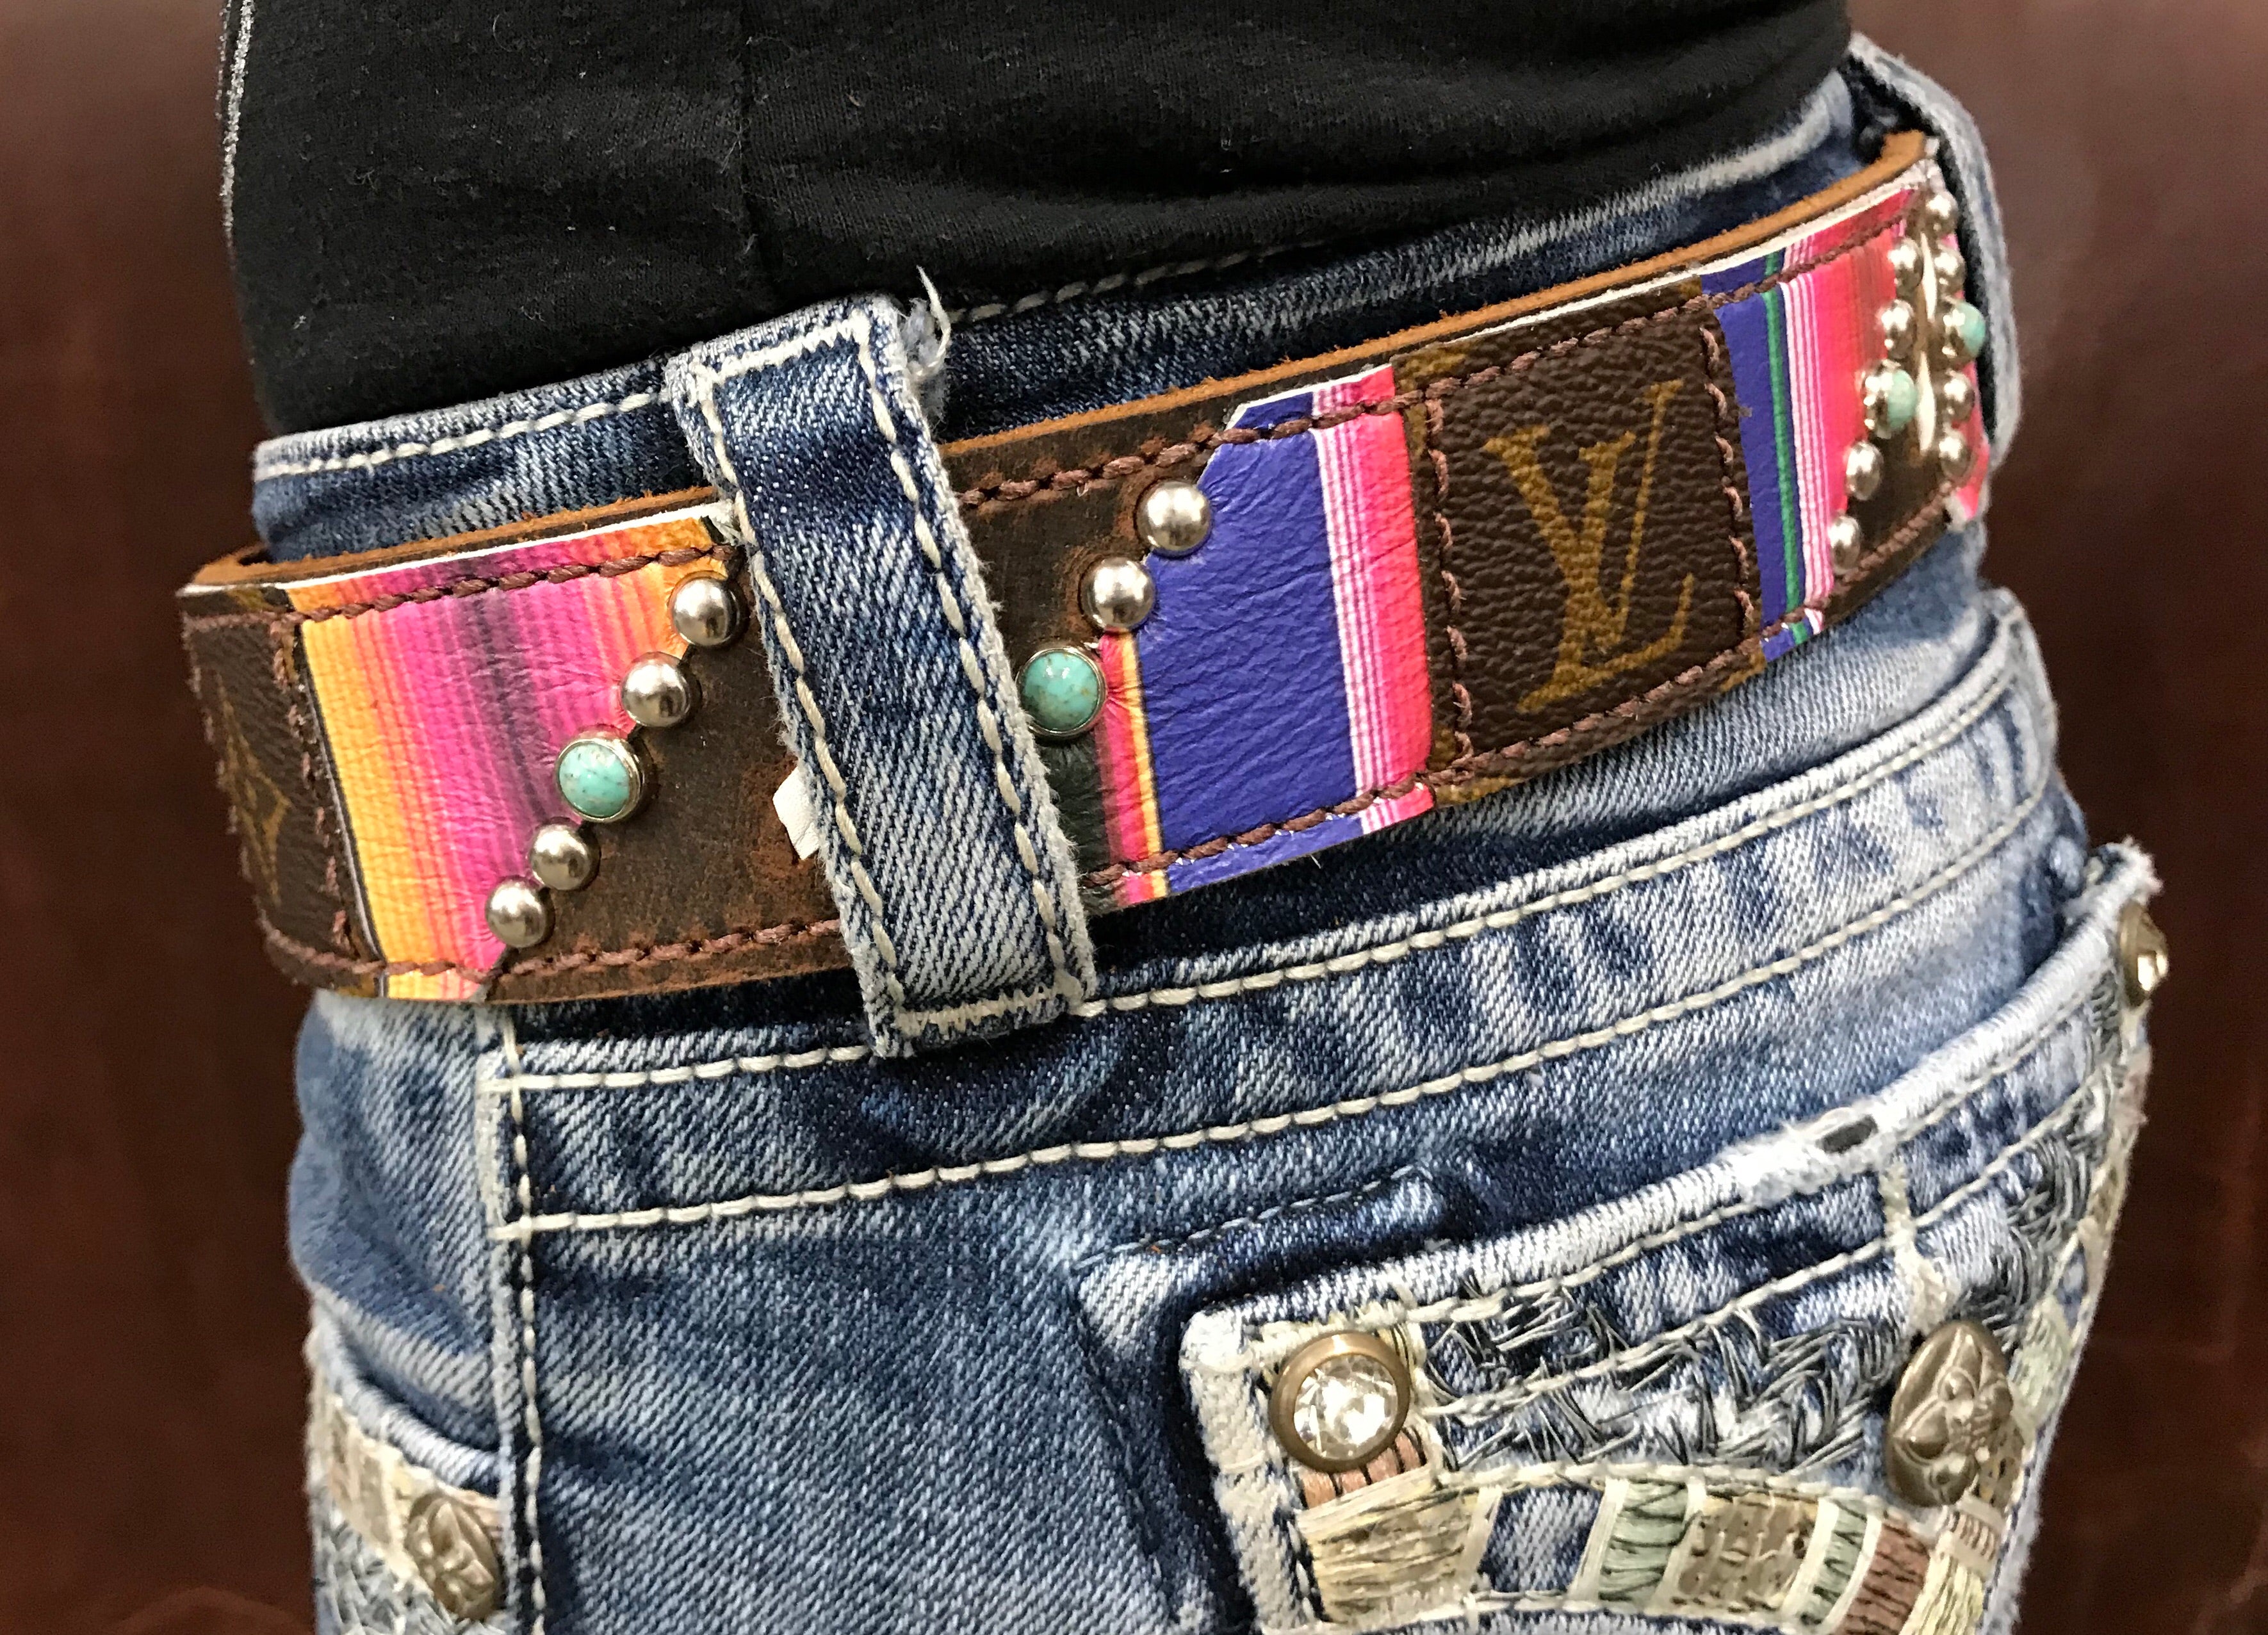 Multicolor Monogram Leather Belt